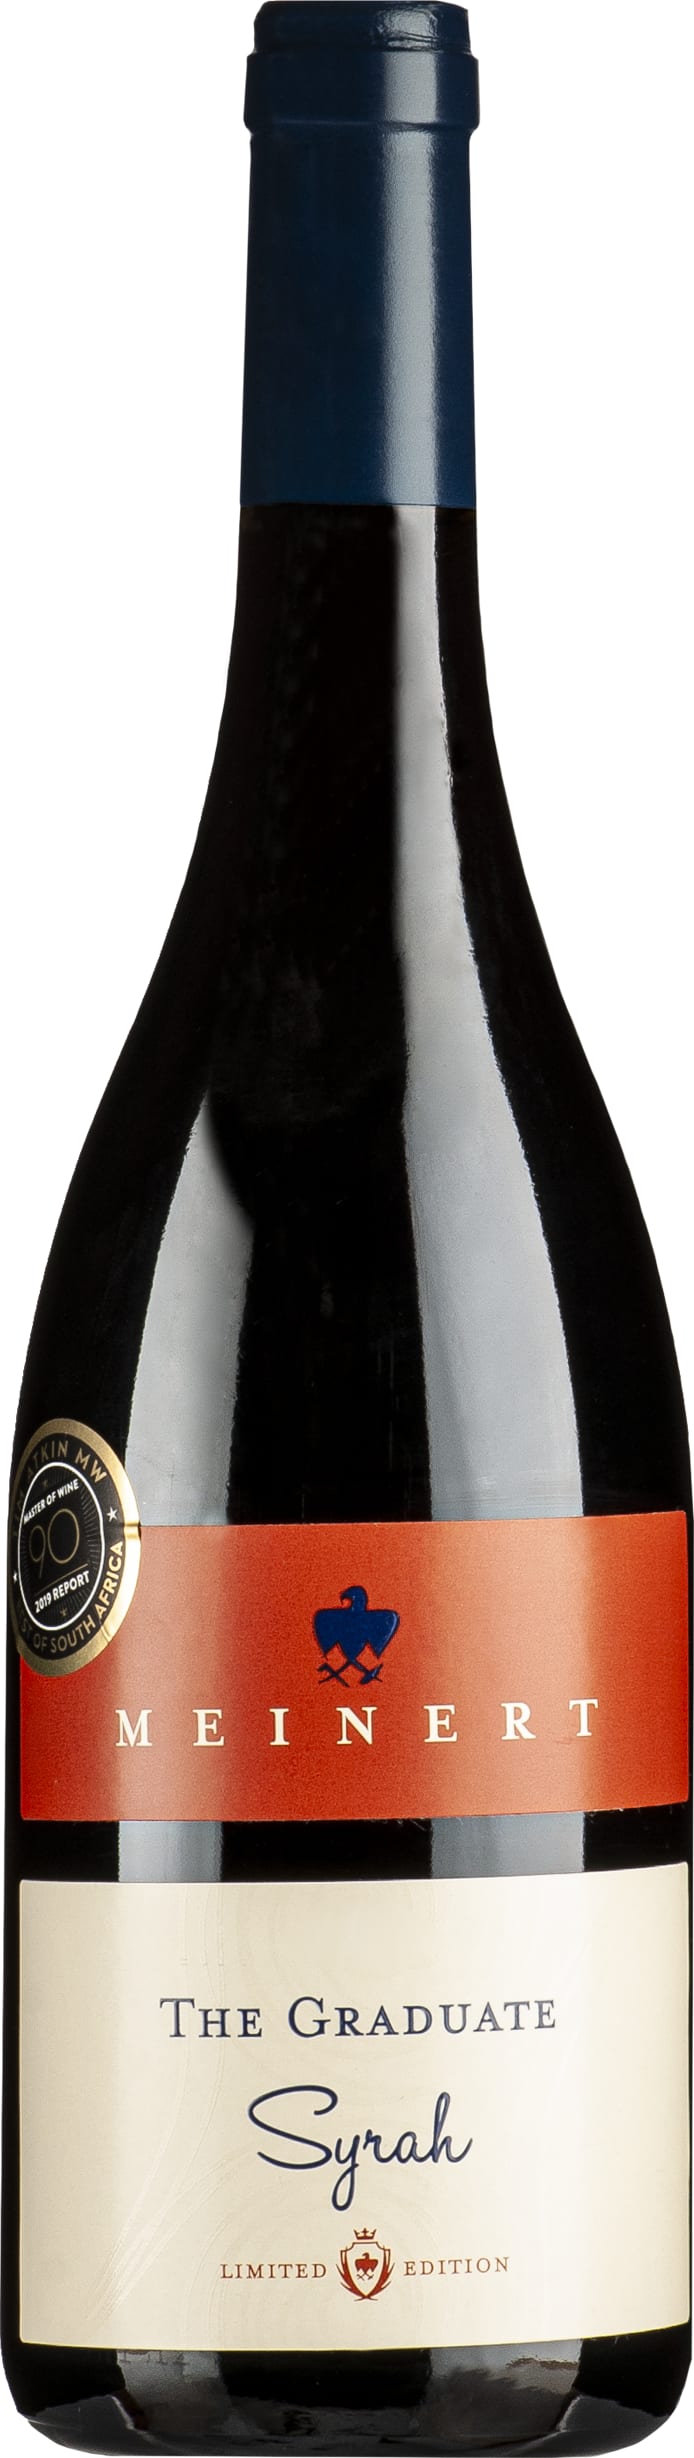 Meinert Syrah 'The Graduate' 2019 75cl - Buy Meinert Wines from GREAT WINES DIRECT wine shop